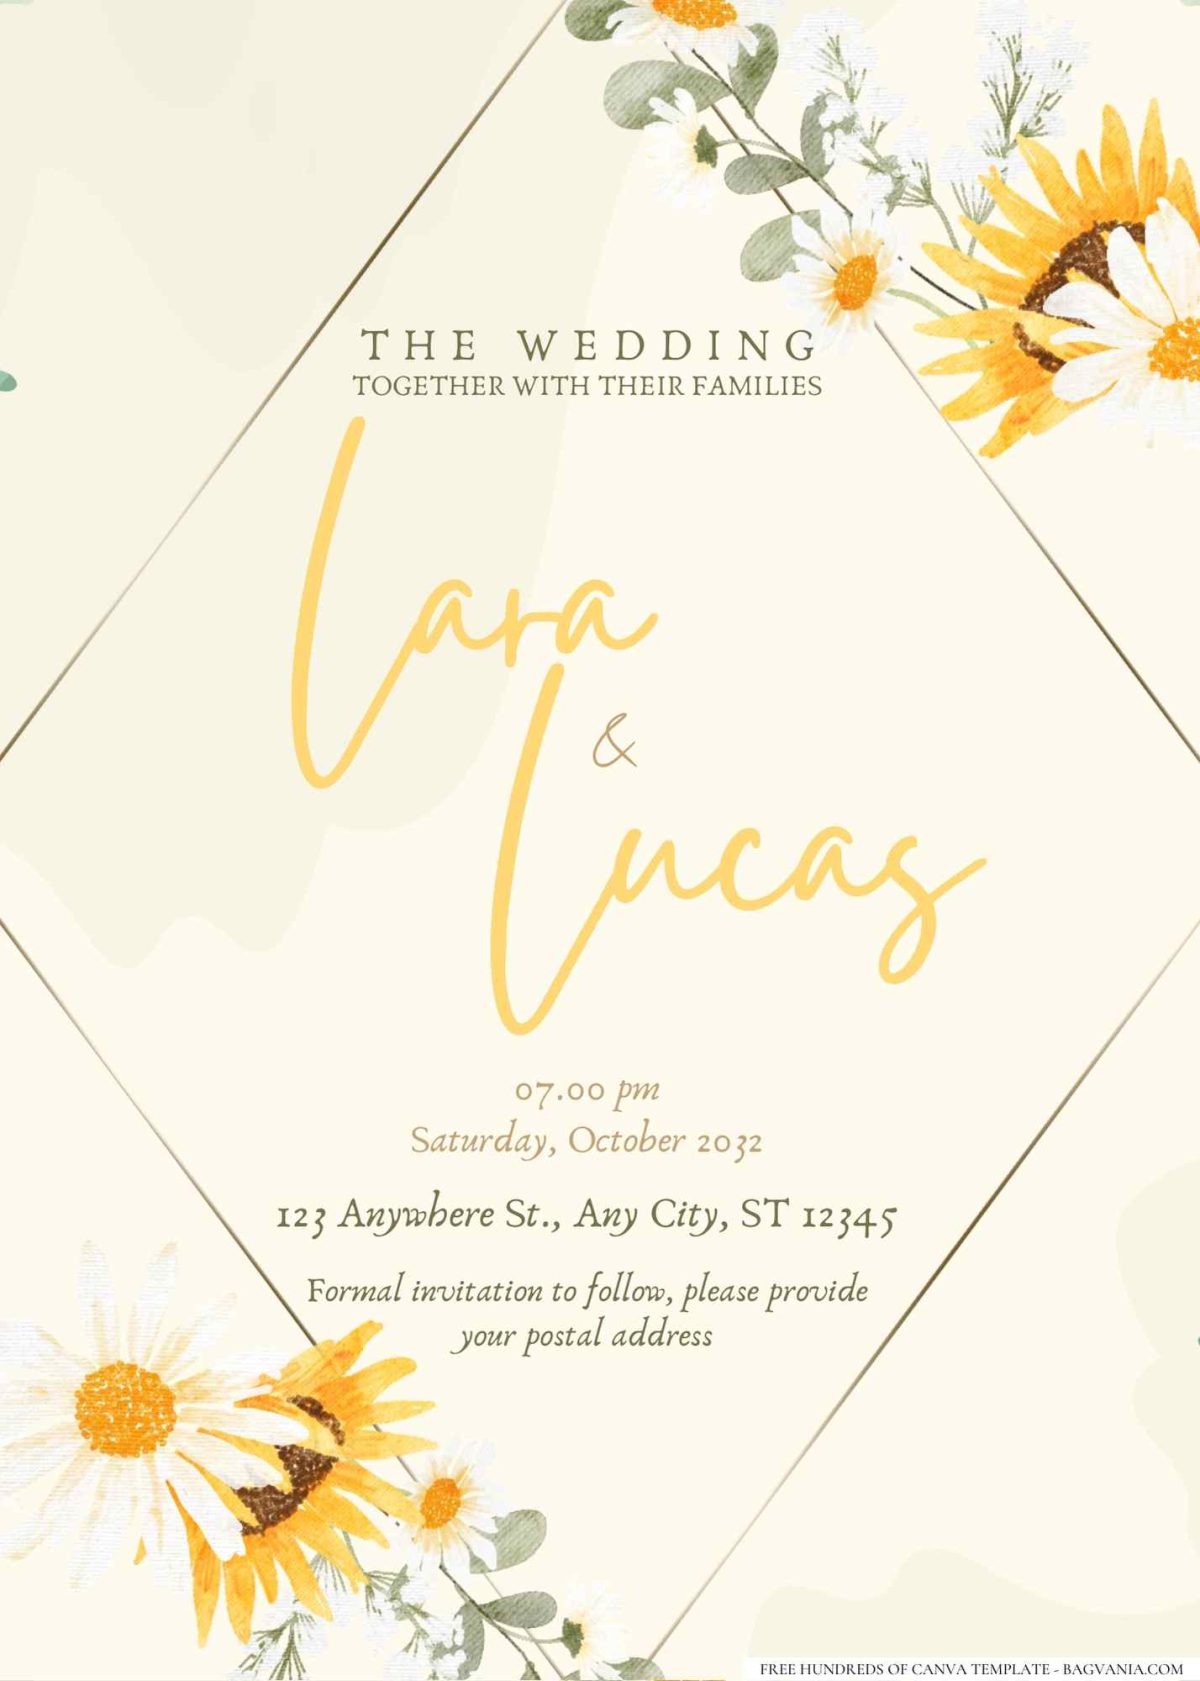 FREE Editable sunflower-themed invitations